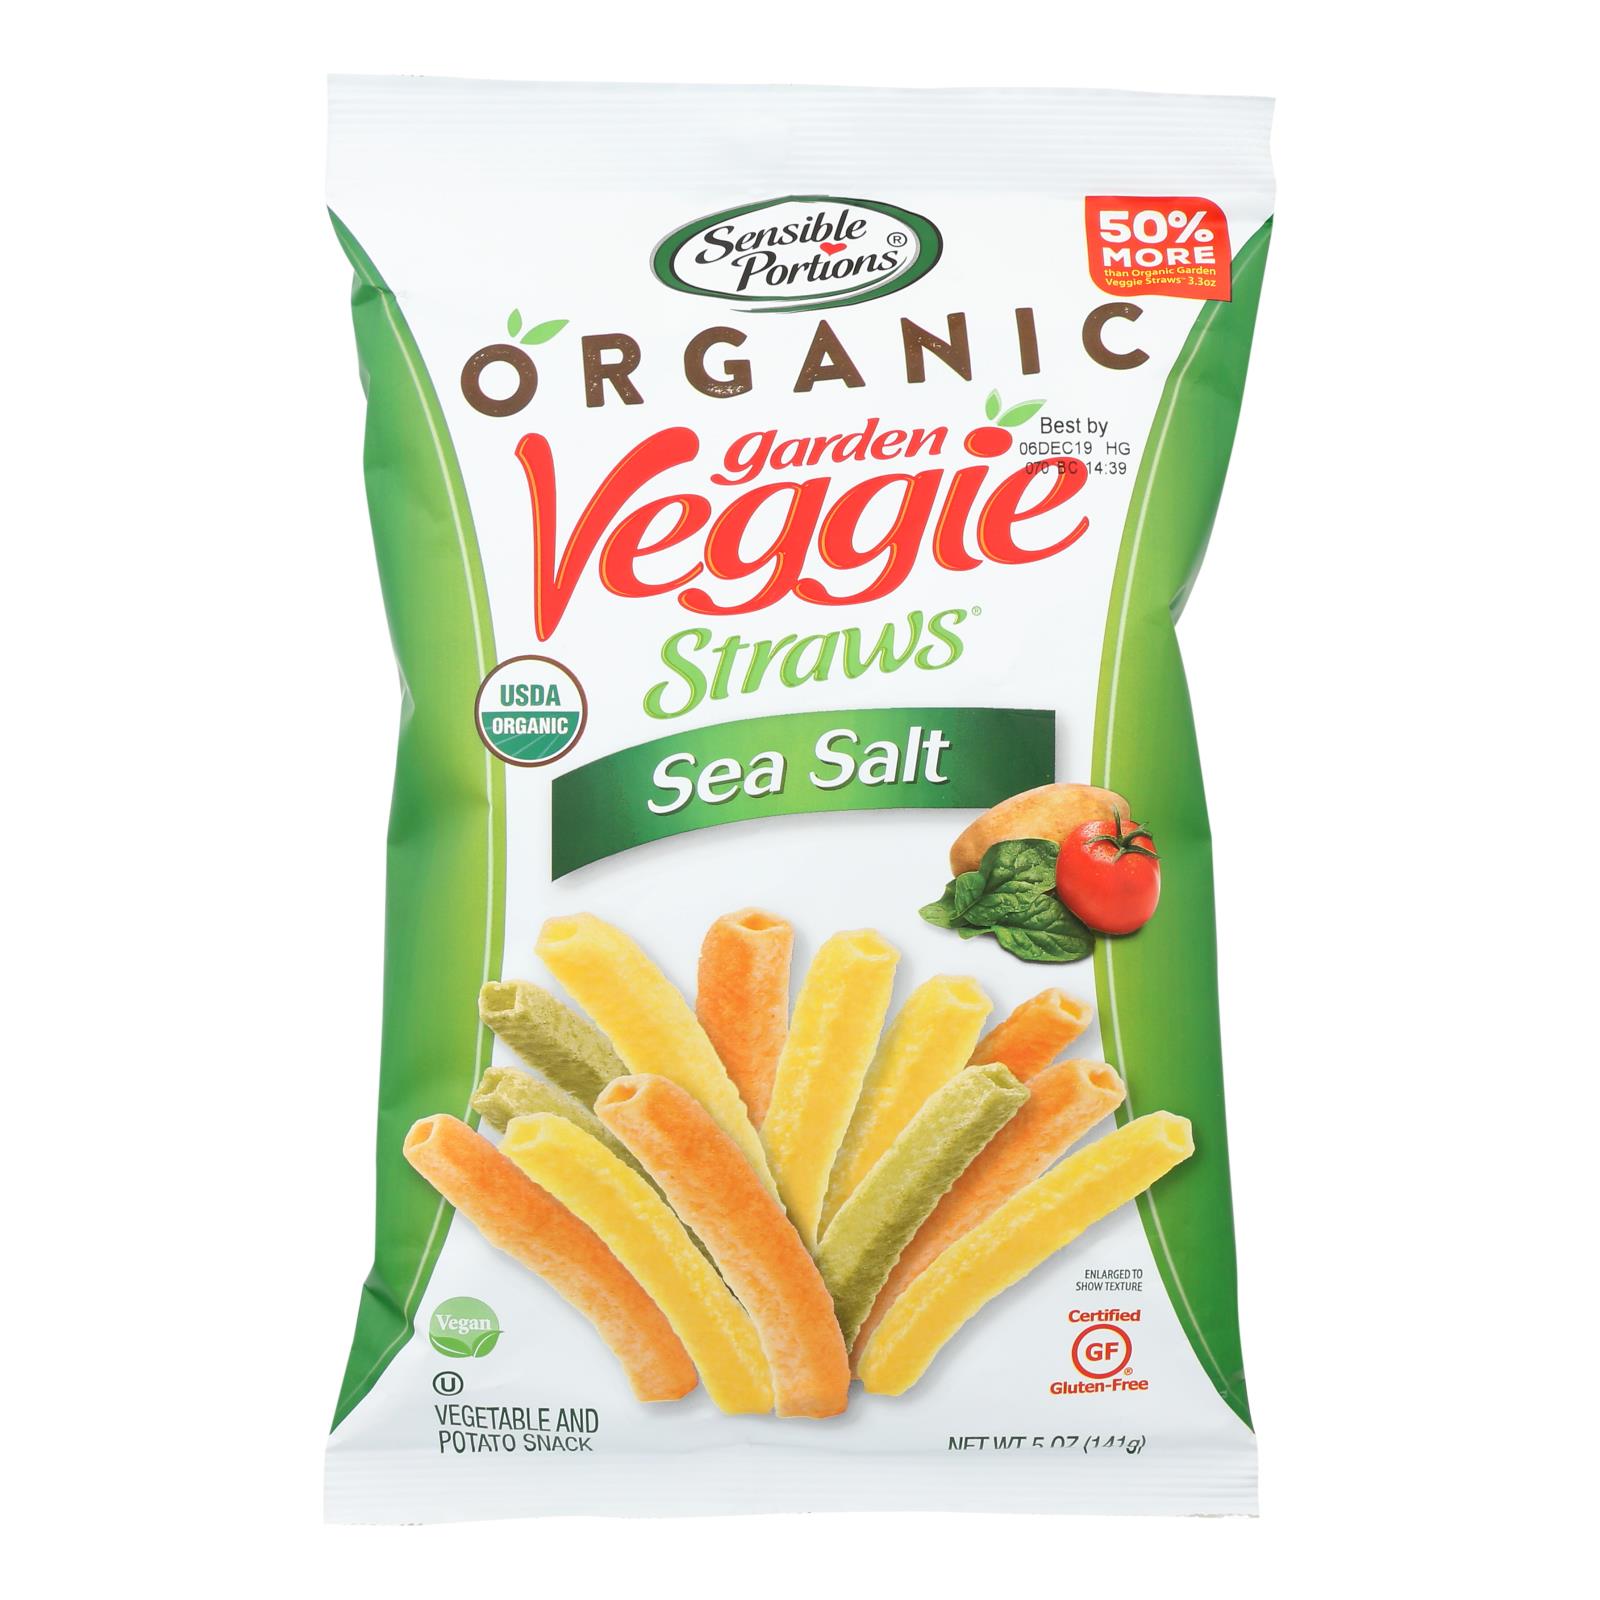 Sensible Portions - Veggie Straws Sea Salt - 12개 묶음상품 - 5 OZ